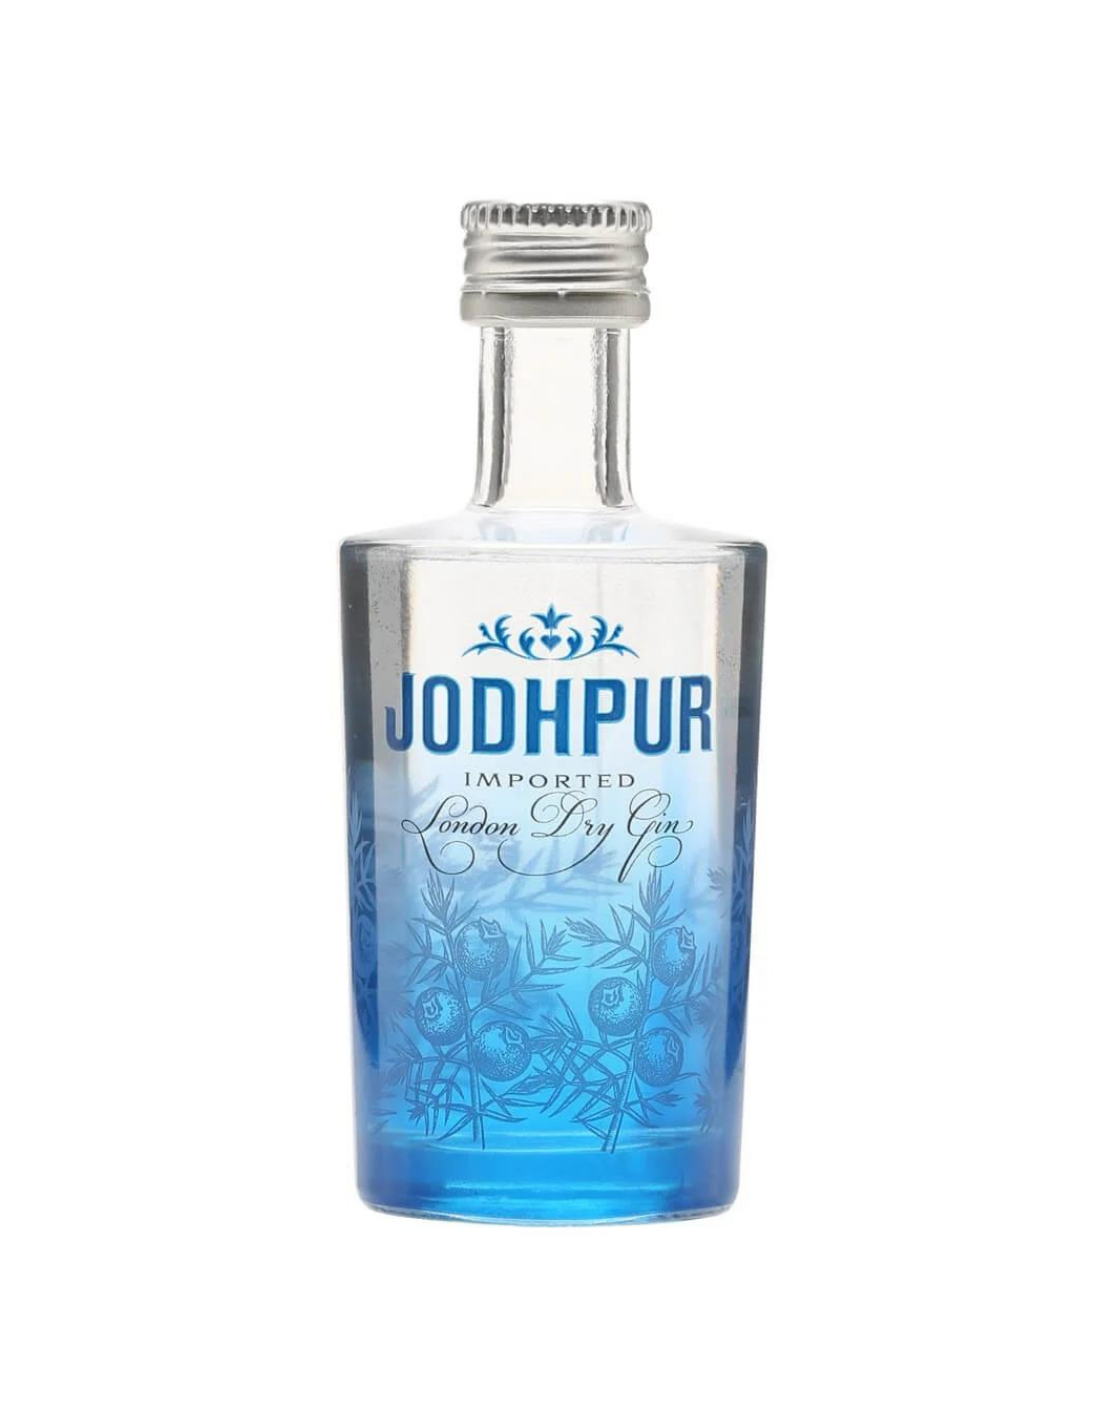 Gin Jodhpur London Dry, 43% alc., 0.05L, Anglia alcooldiscount.ro